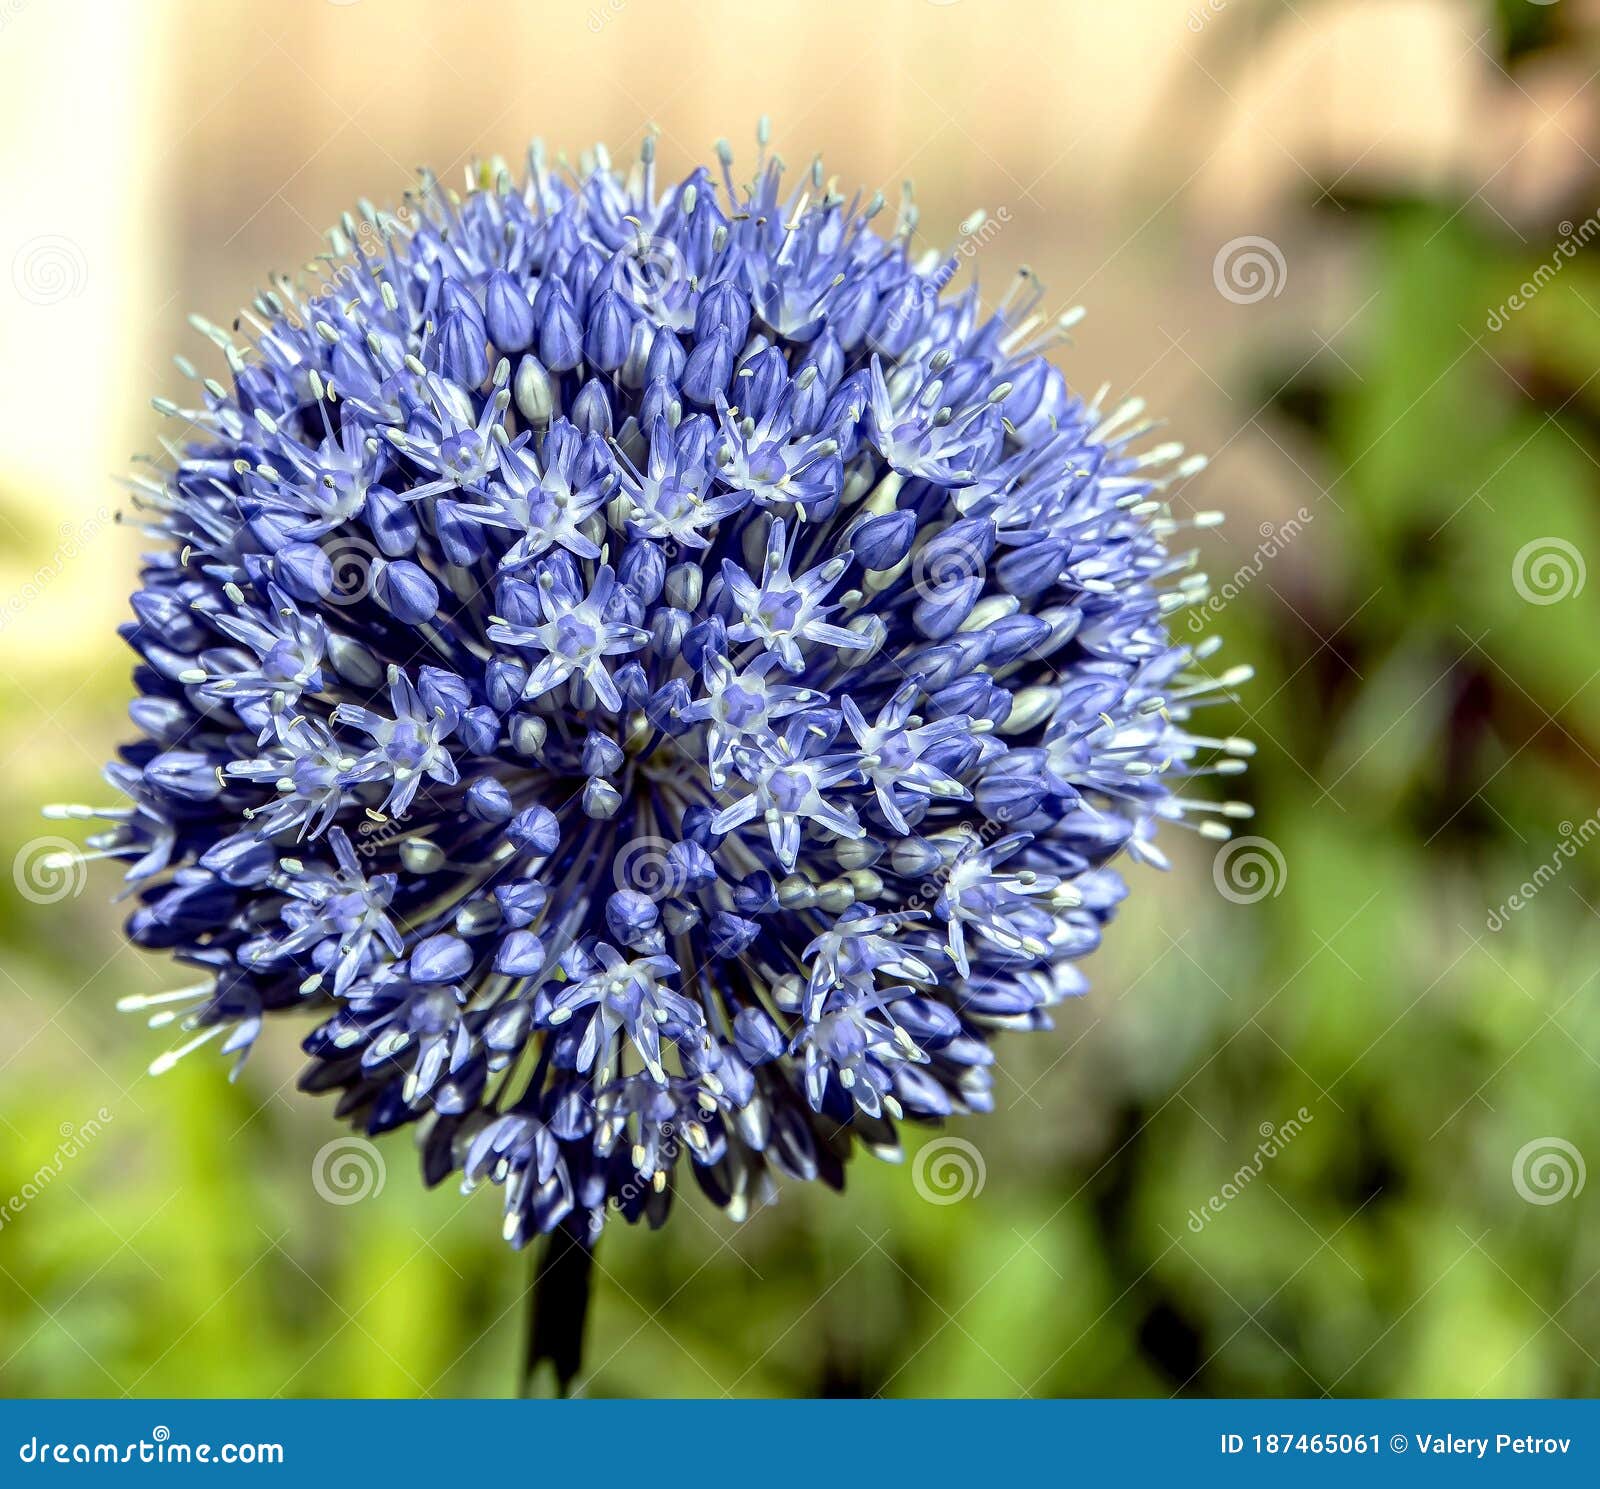 blooming blue decorative onion plant with the latin name allium caeruleum, macro